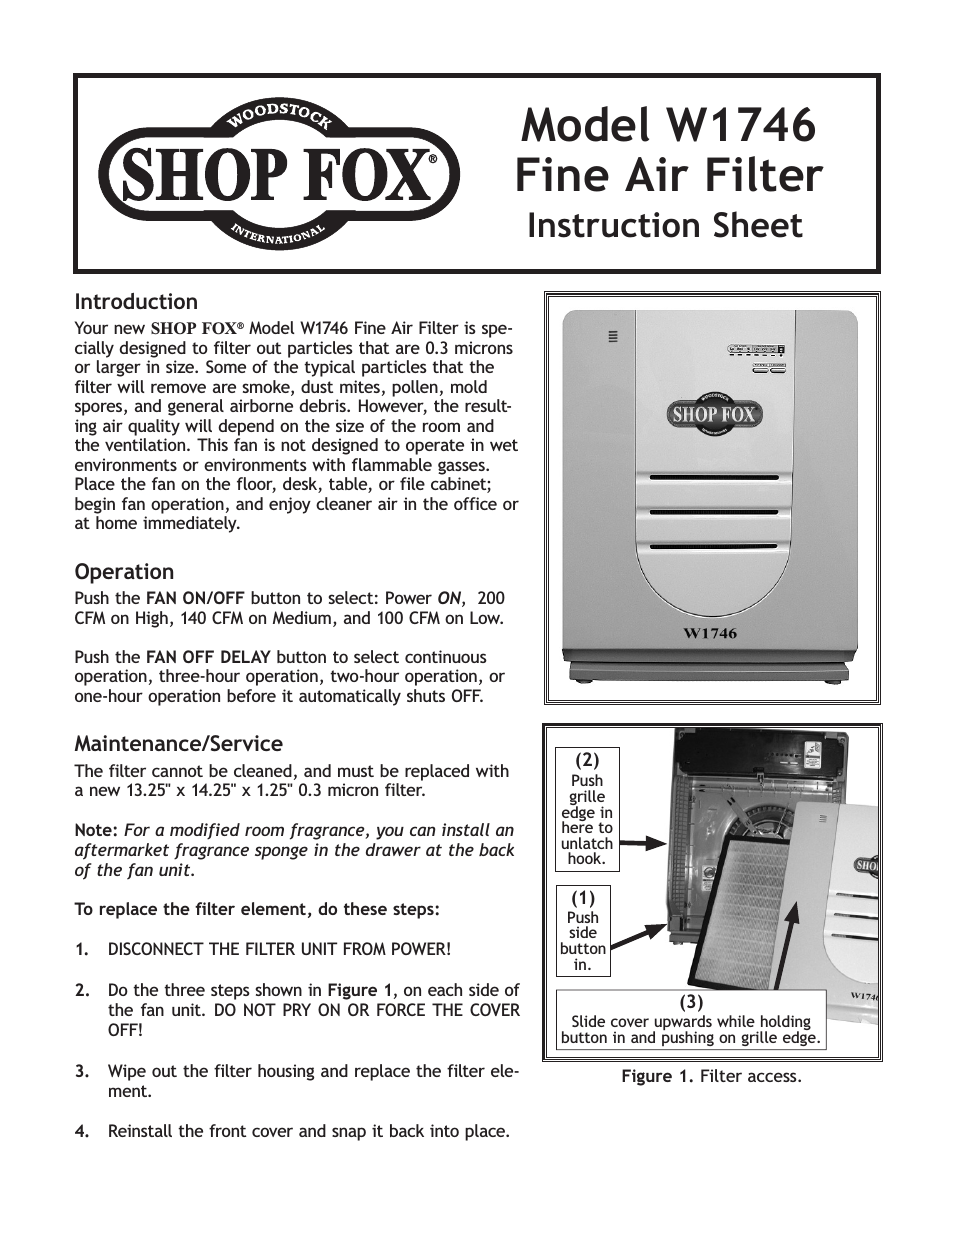 Fine Air Filter W1746